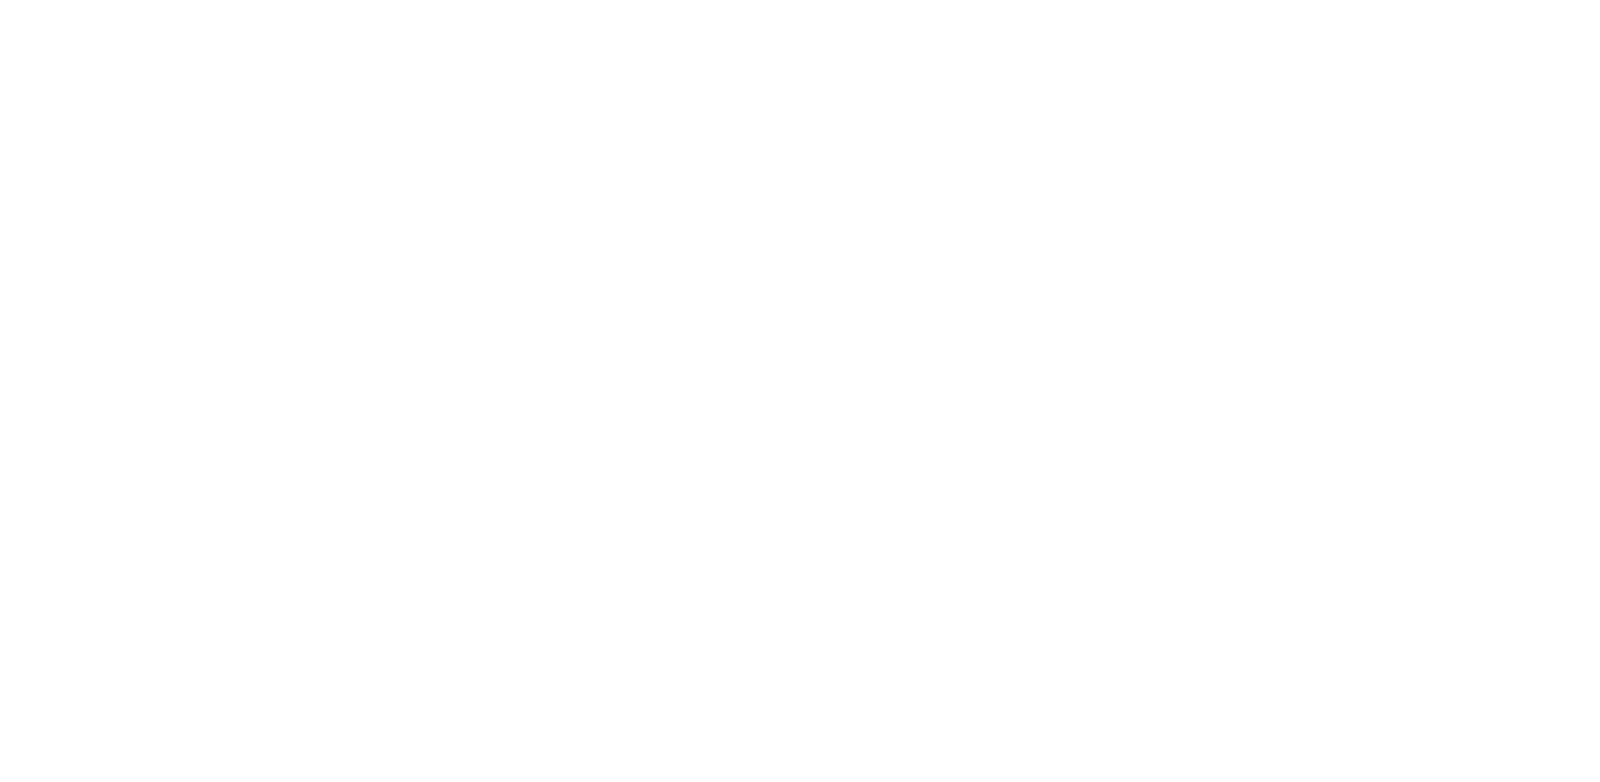 Merta Collection